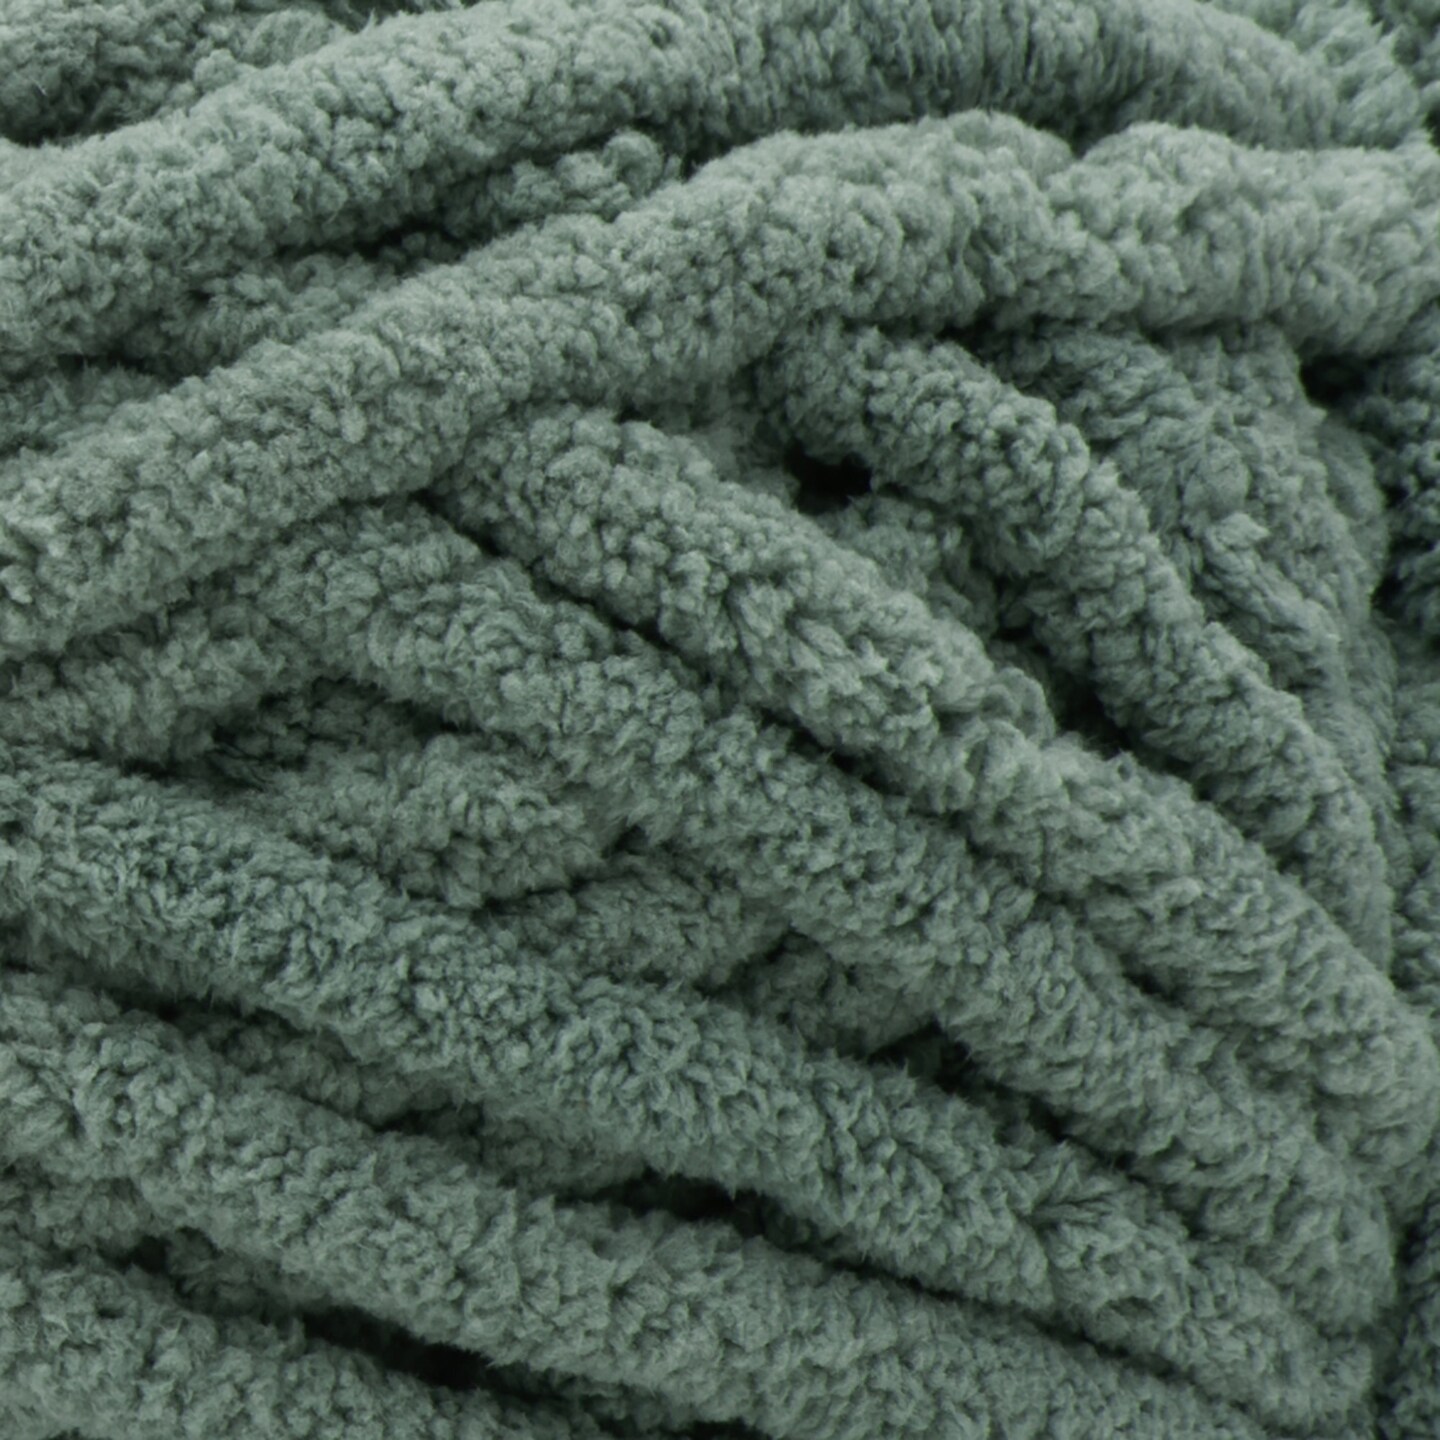 Bernat Blanket Yarn - Smoky Green, 220 yards